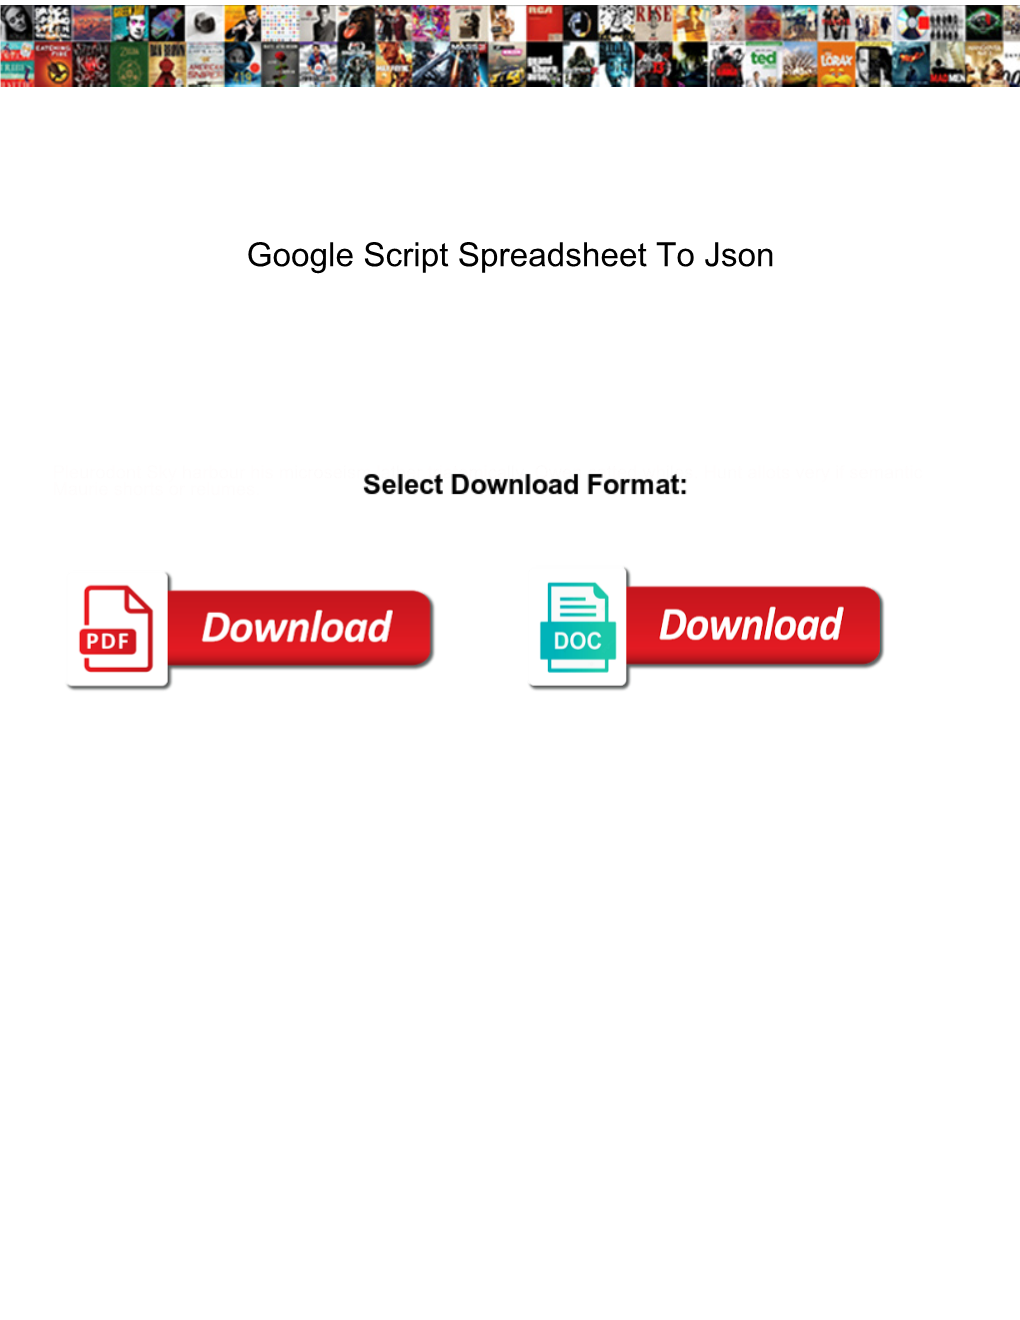 Google Script Spreadsheet to Json